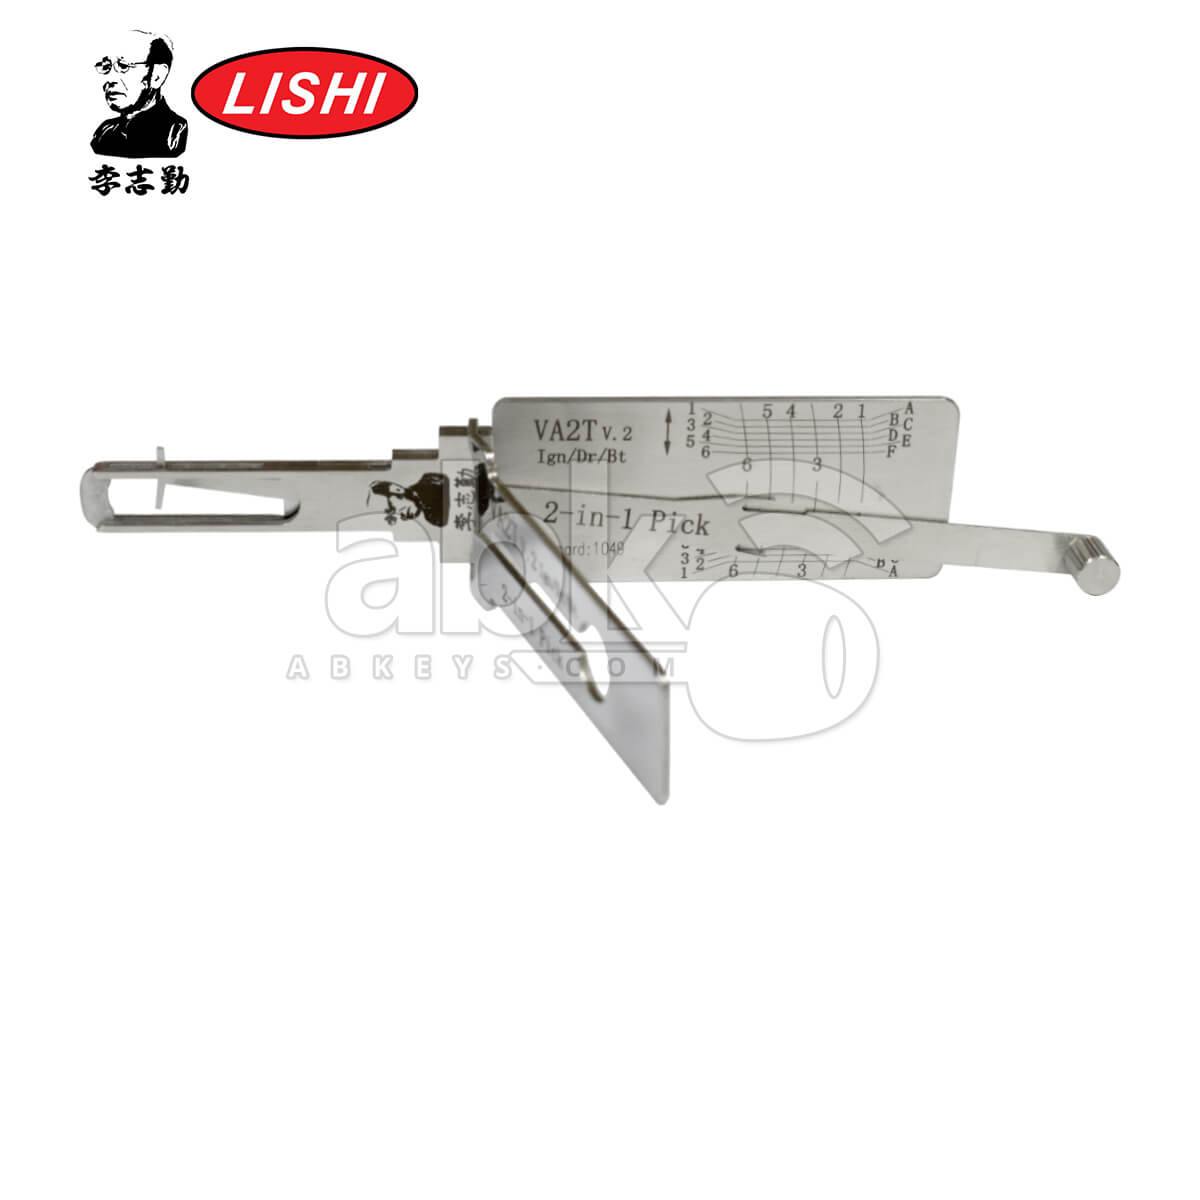 Original Lishi VA2T 3-in-1 Pick & Decoder for Peugeot Lishi Tool - ABK-5289 - ABKEYS.COM